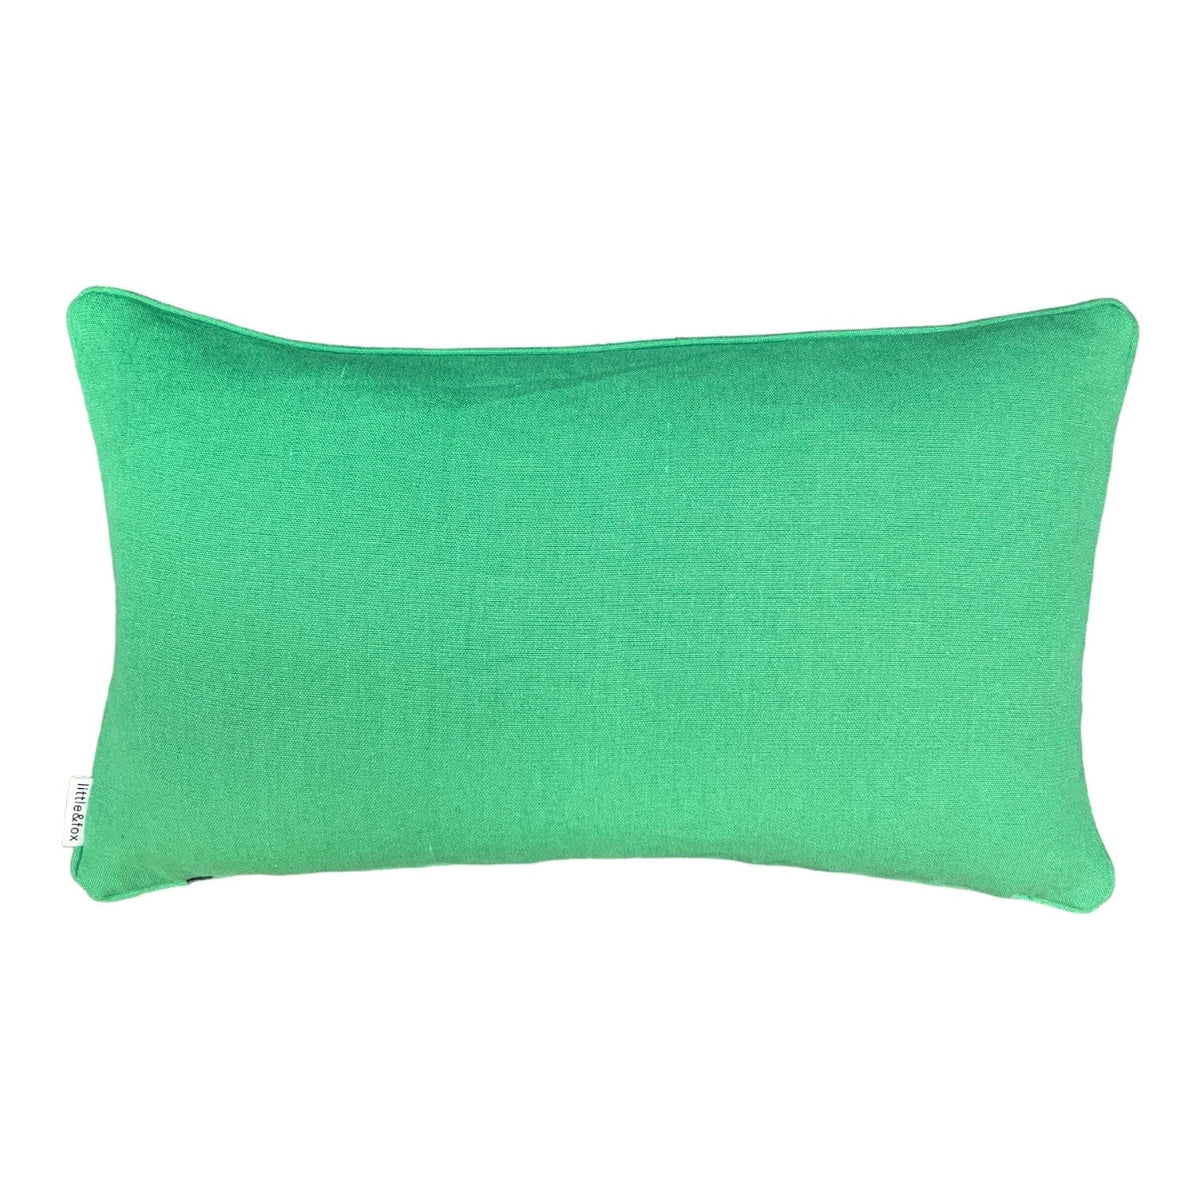 Zinnia Emerald Sky 60x35cm Piped Cushion